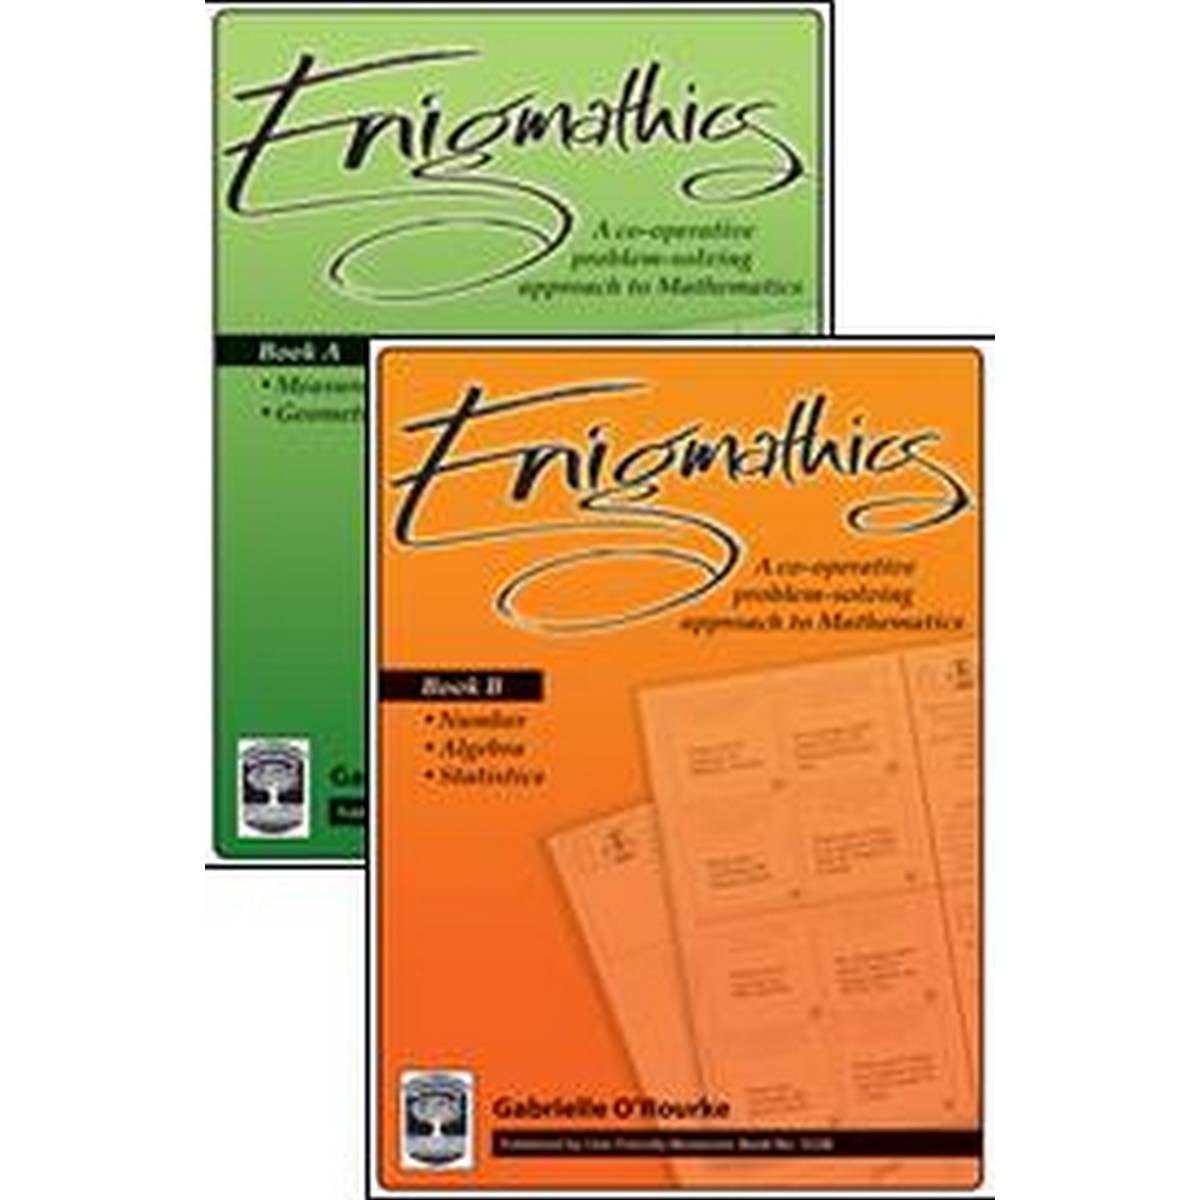 Enigmathics Set: Book A: (Measurement & Geometry) & Book B (Number, Algebra & Statistics)